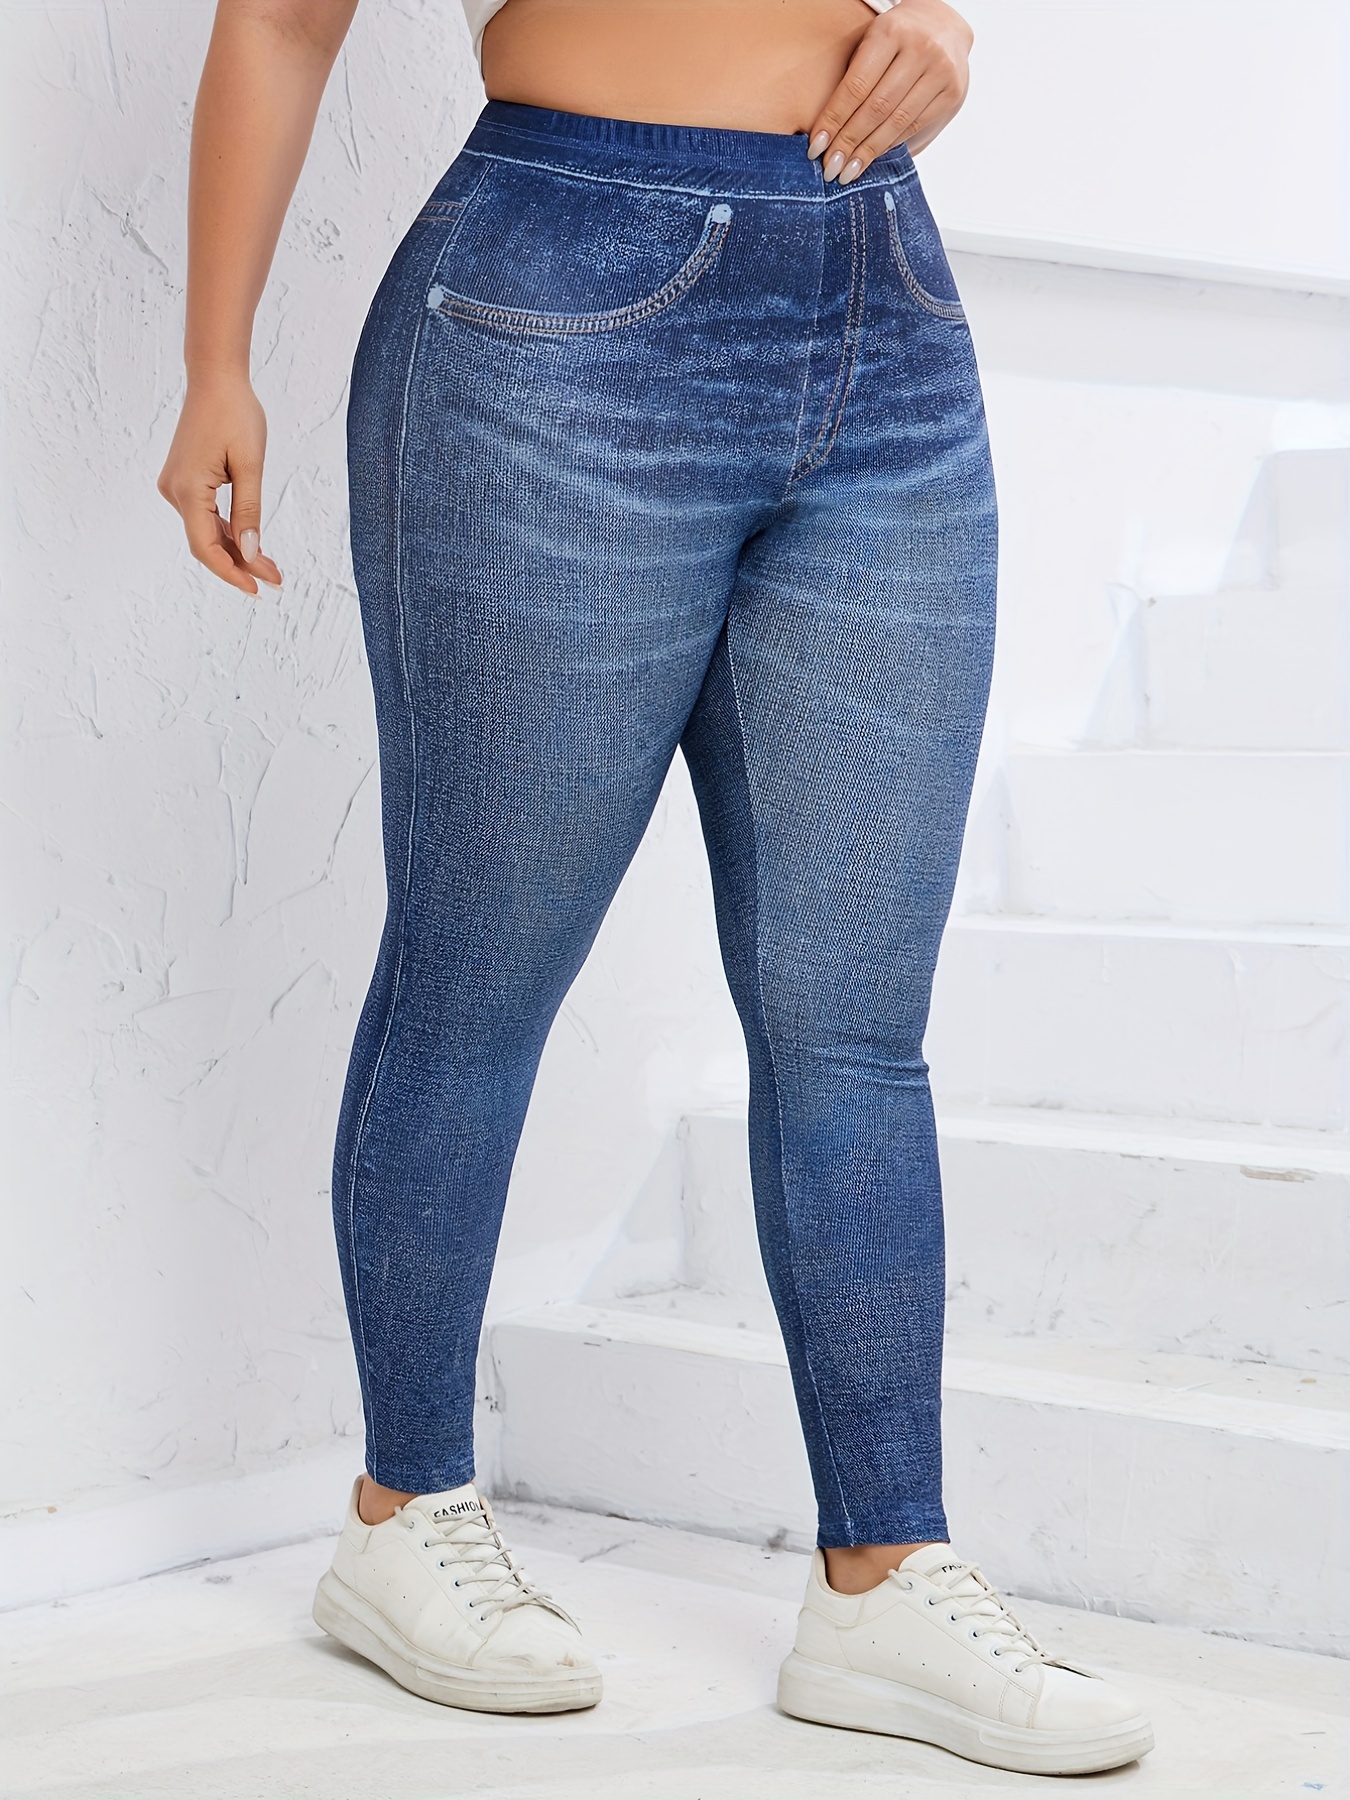 Capri Leggings for Women Plus Size Lace Trim Leggings Tummy Control  Jeggings High Waist Stretchy Jeans Skinny Capris Pants at  Women's  Clothing store